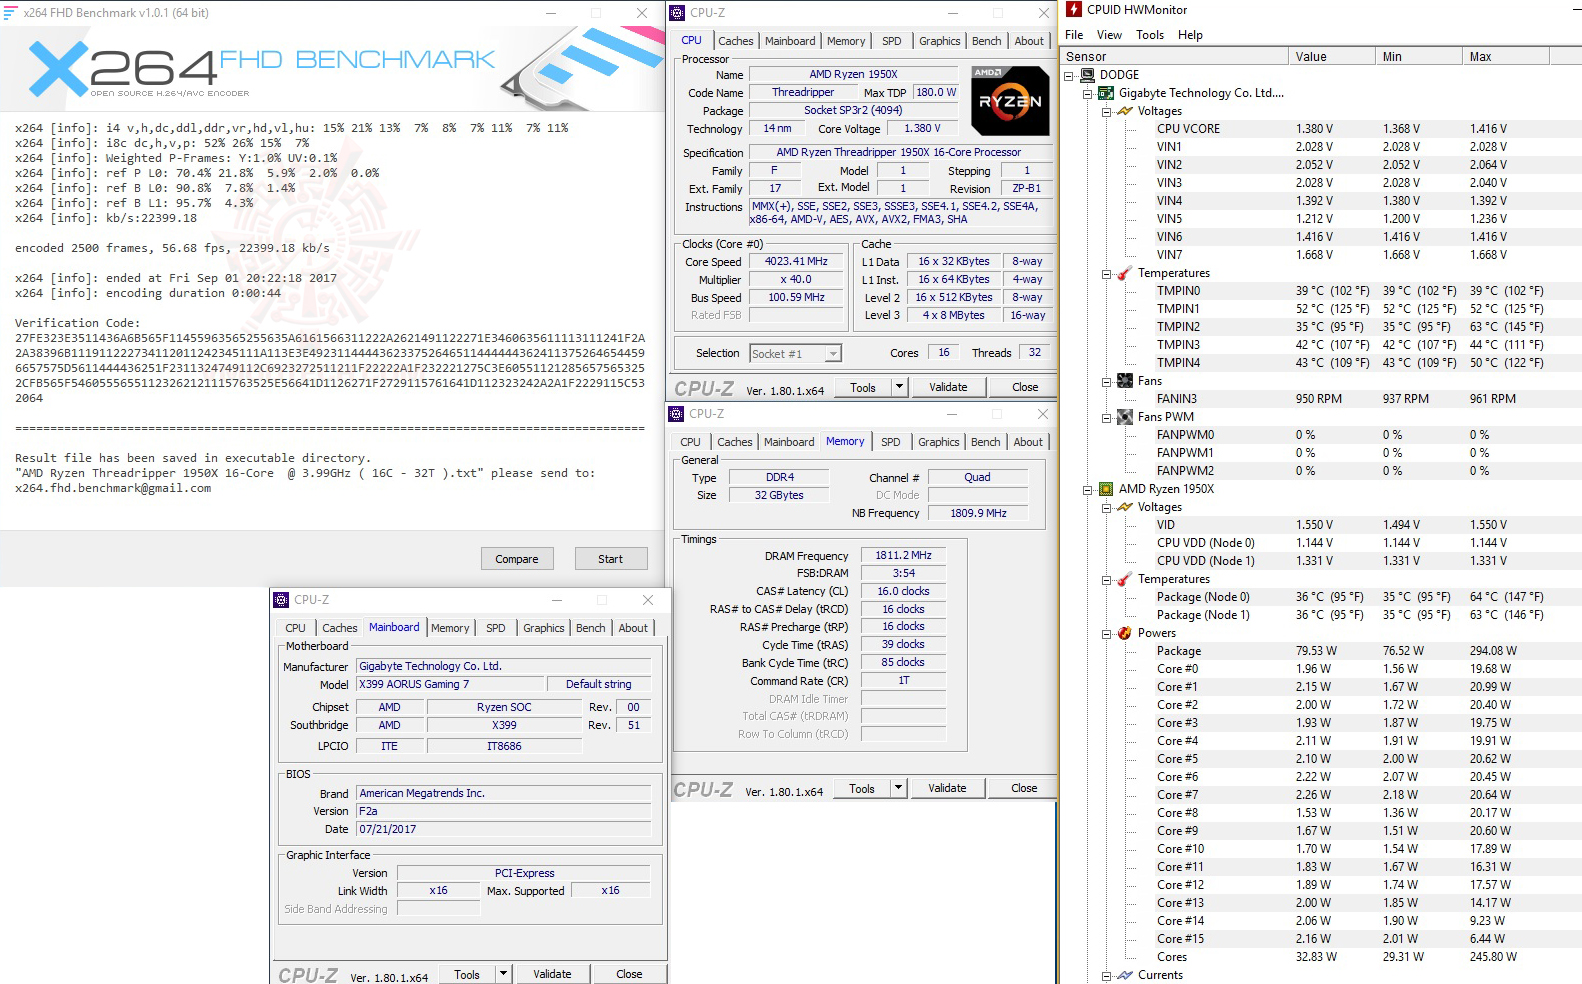 x264 1 36 G.SKILL Trident Z RGB DDR4 3200MHz 32GB (8GBx4) Quad Channel Review